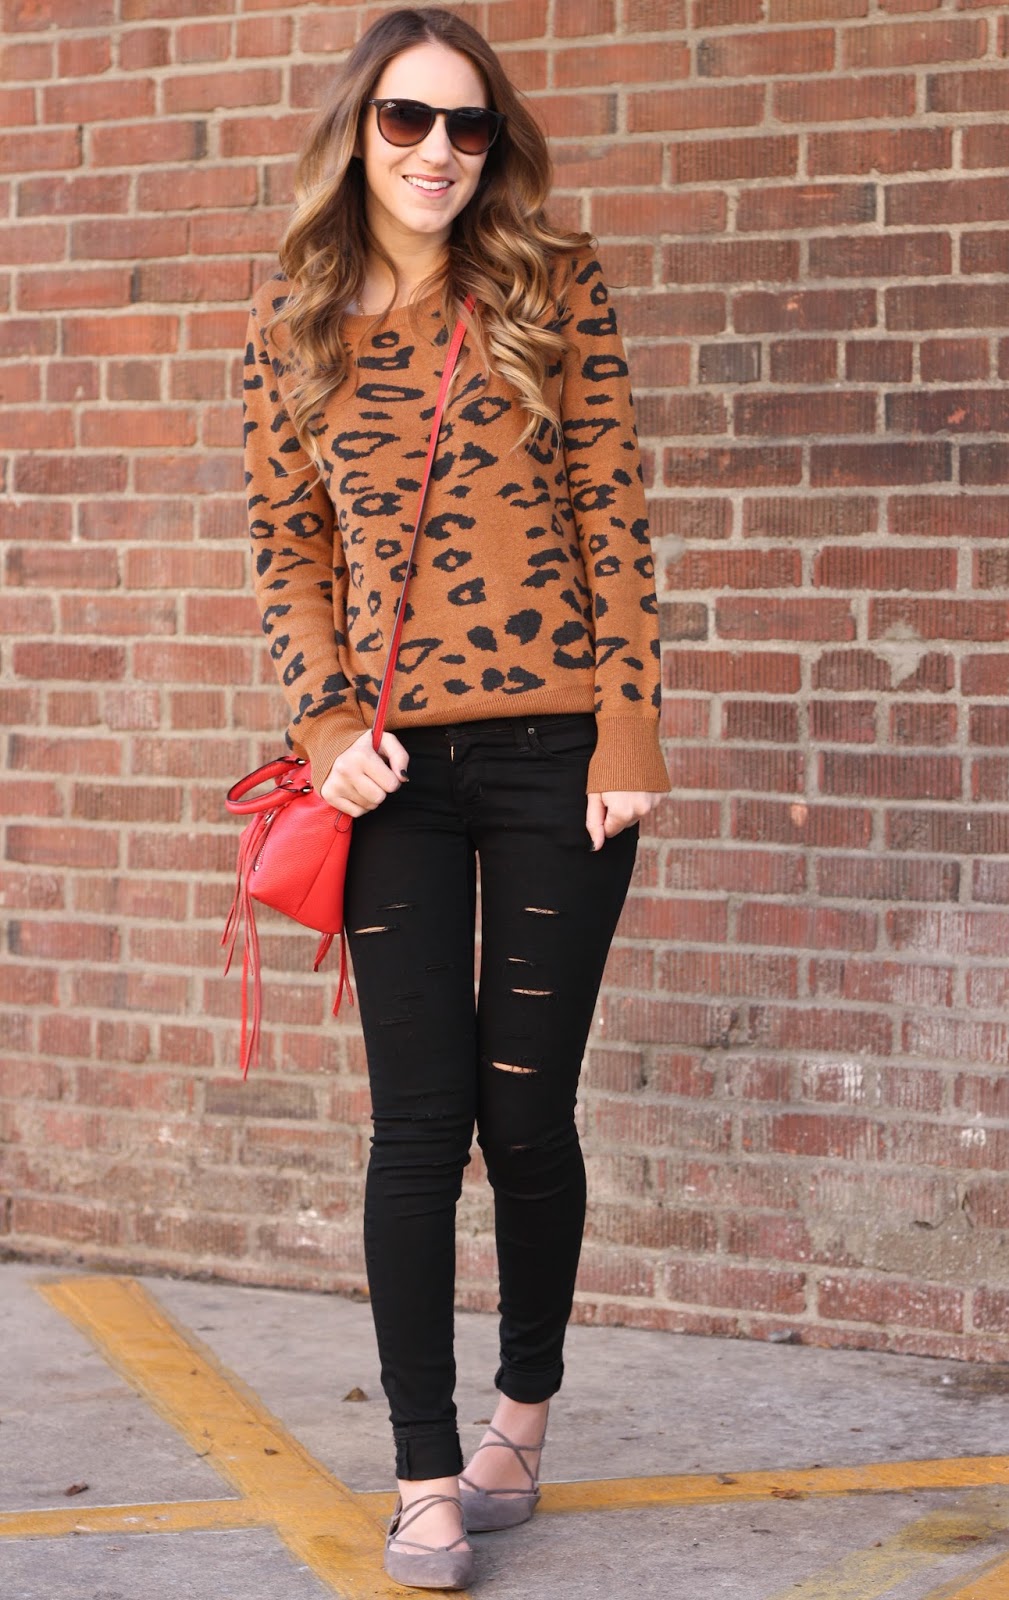 Leopard Sweater - Twenties Girl Style